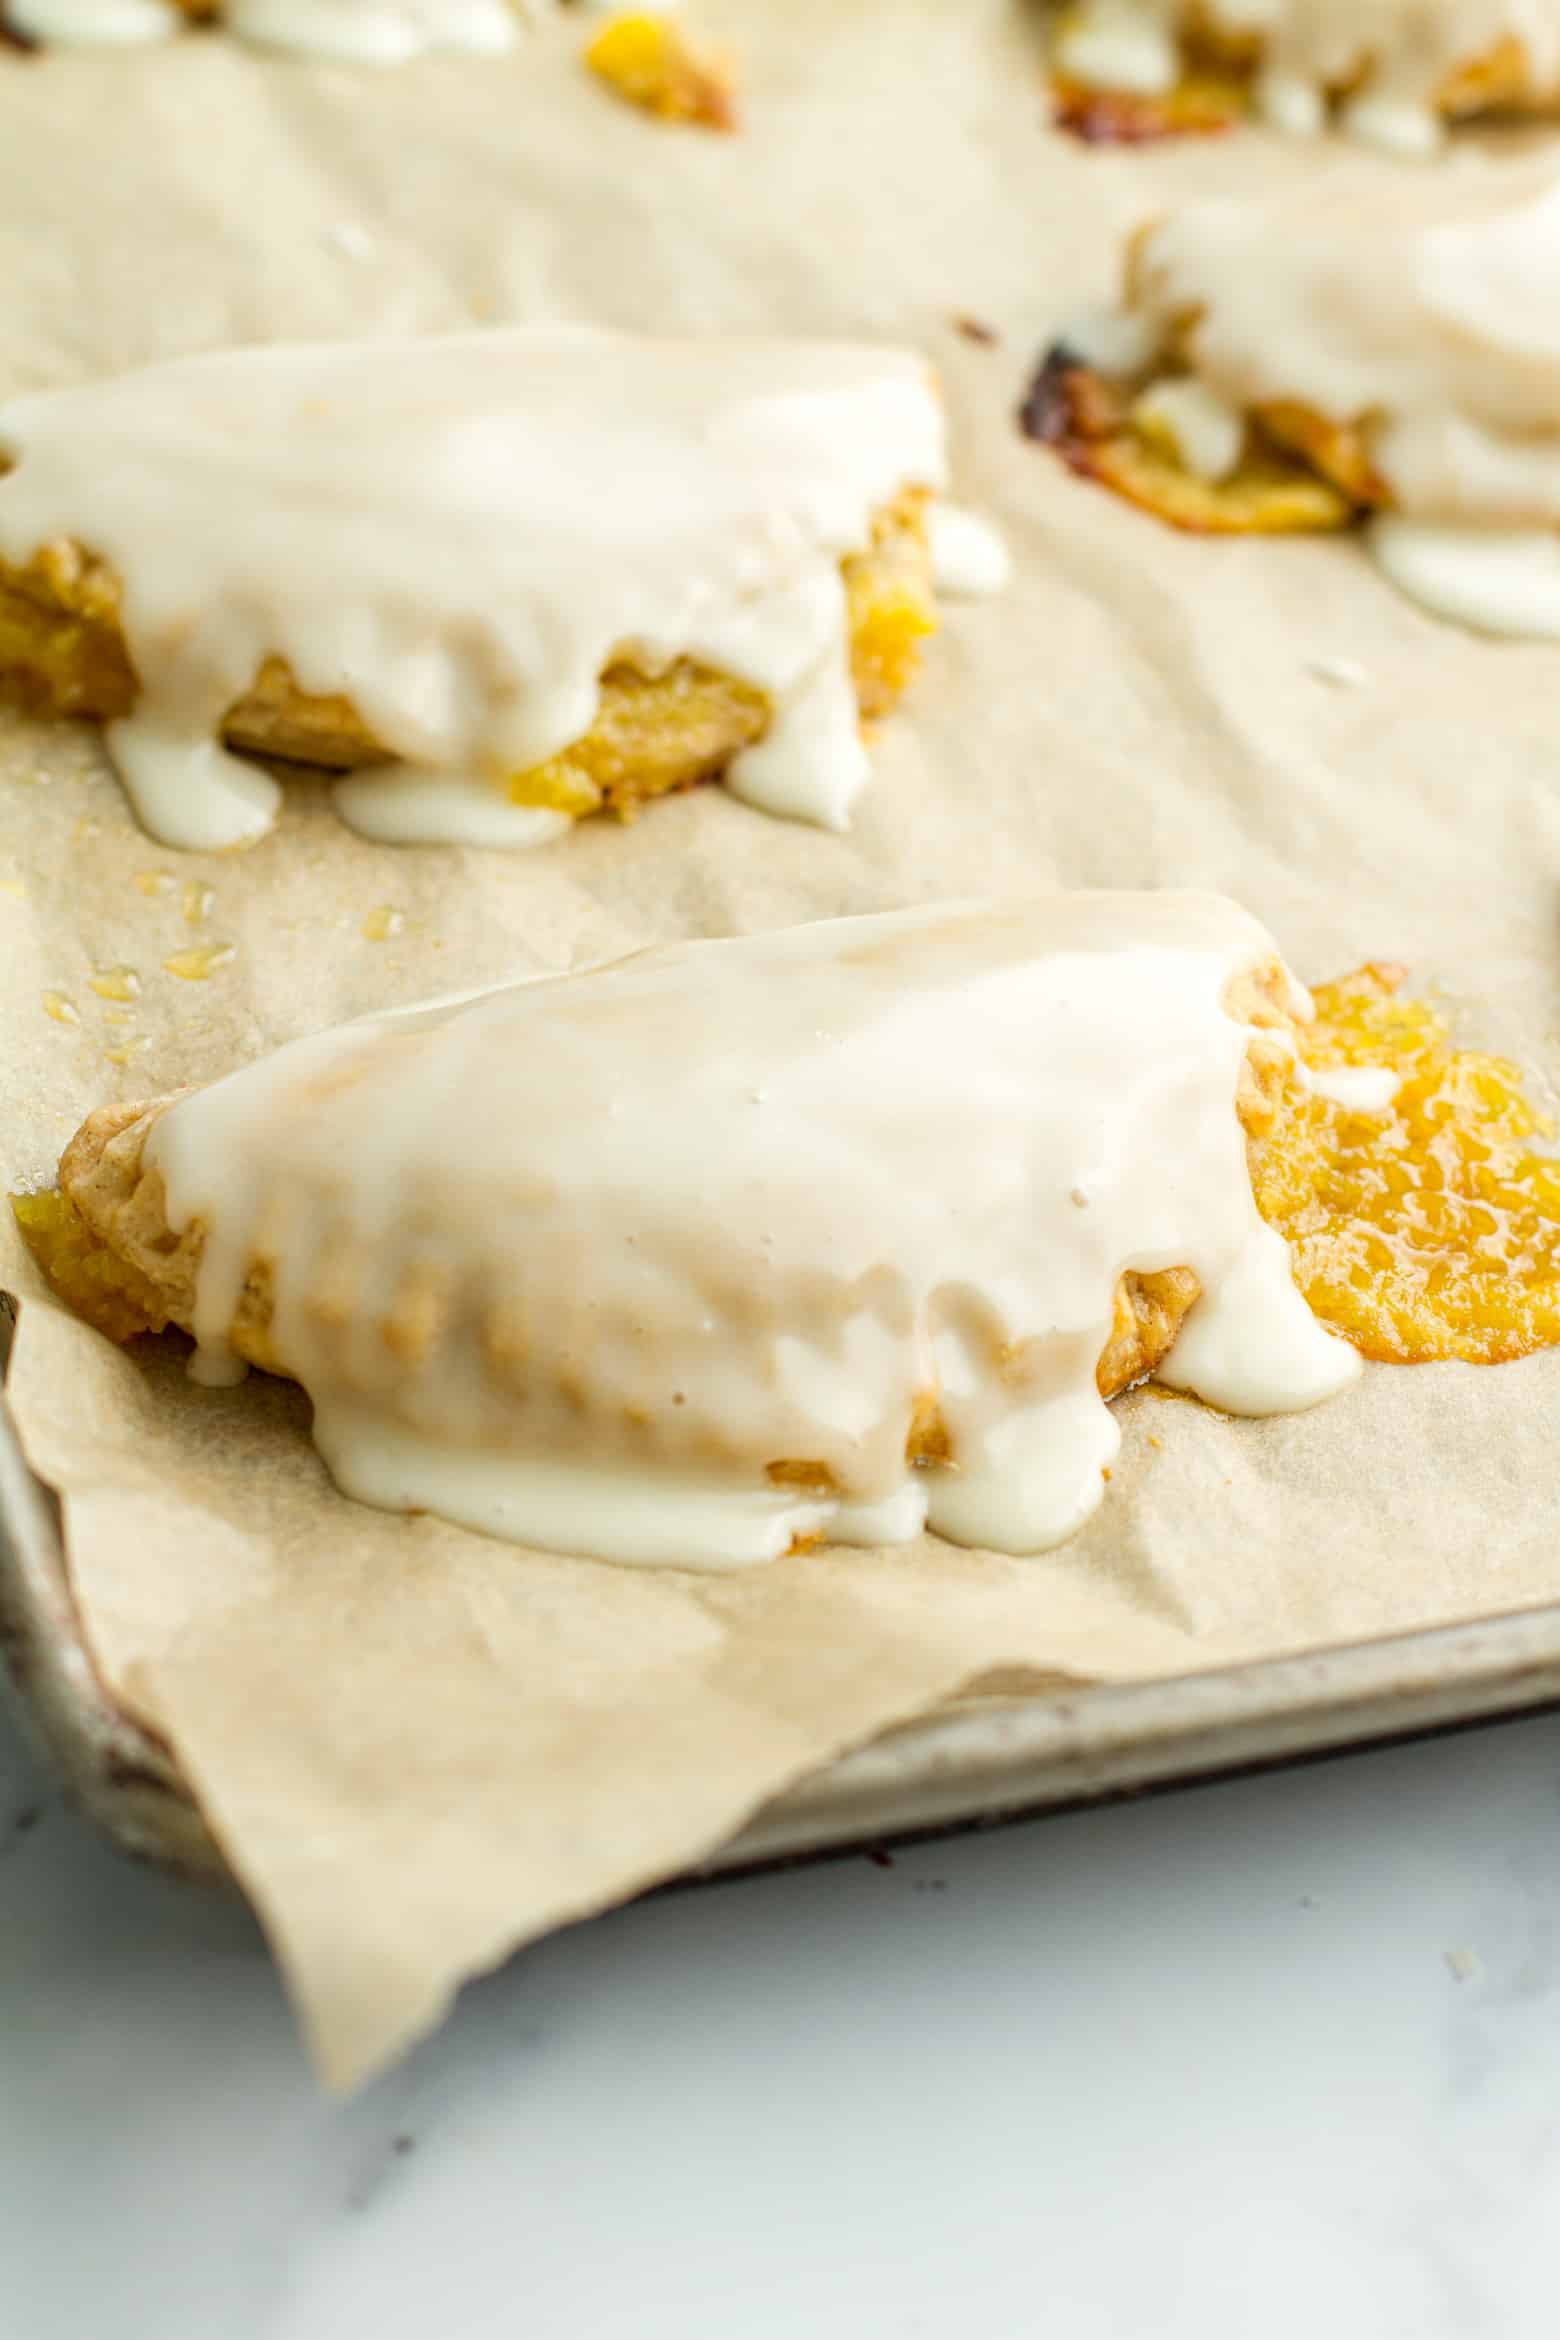 Iced lemon hand pie on a baking sheet.